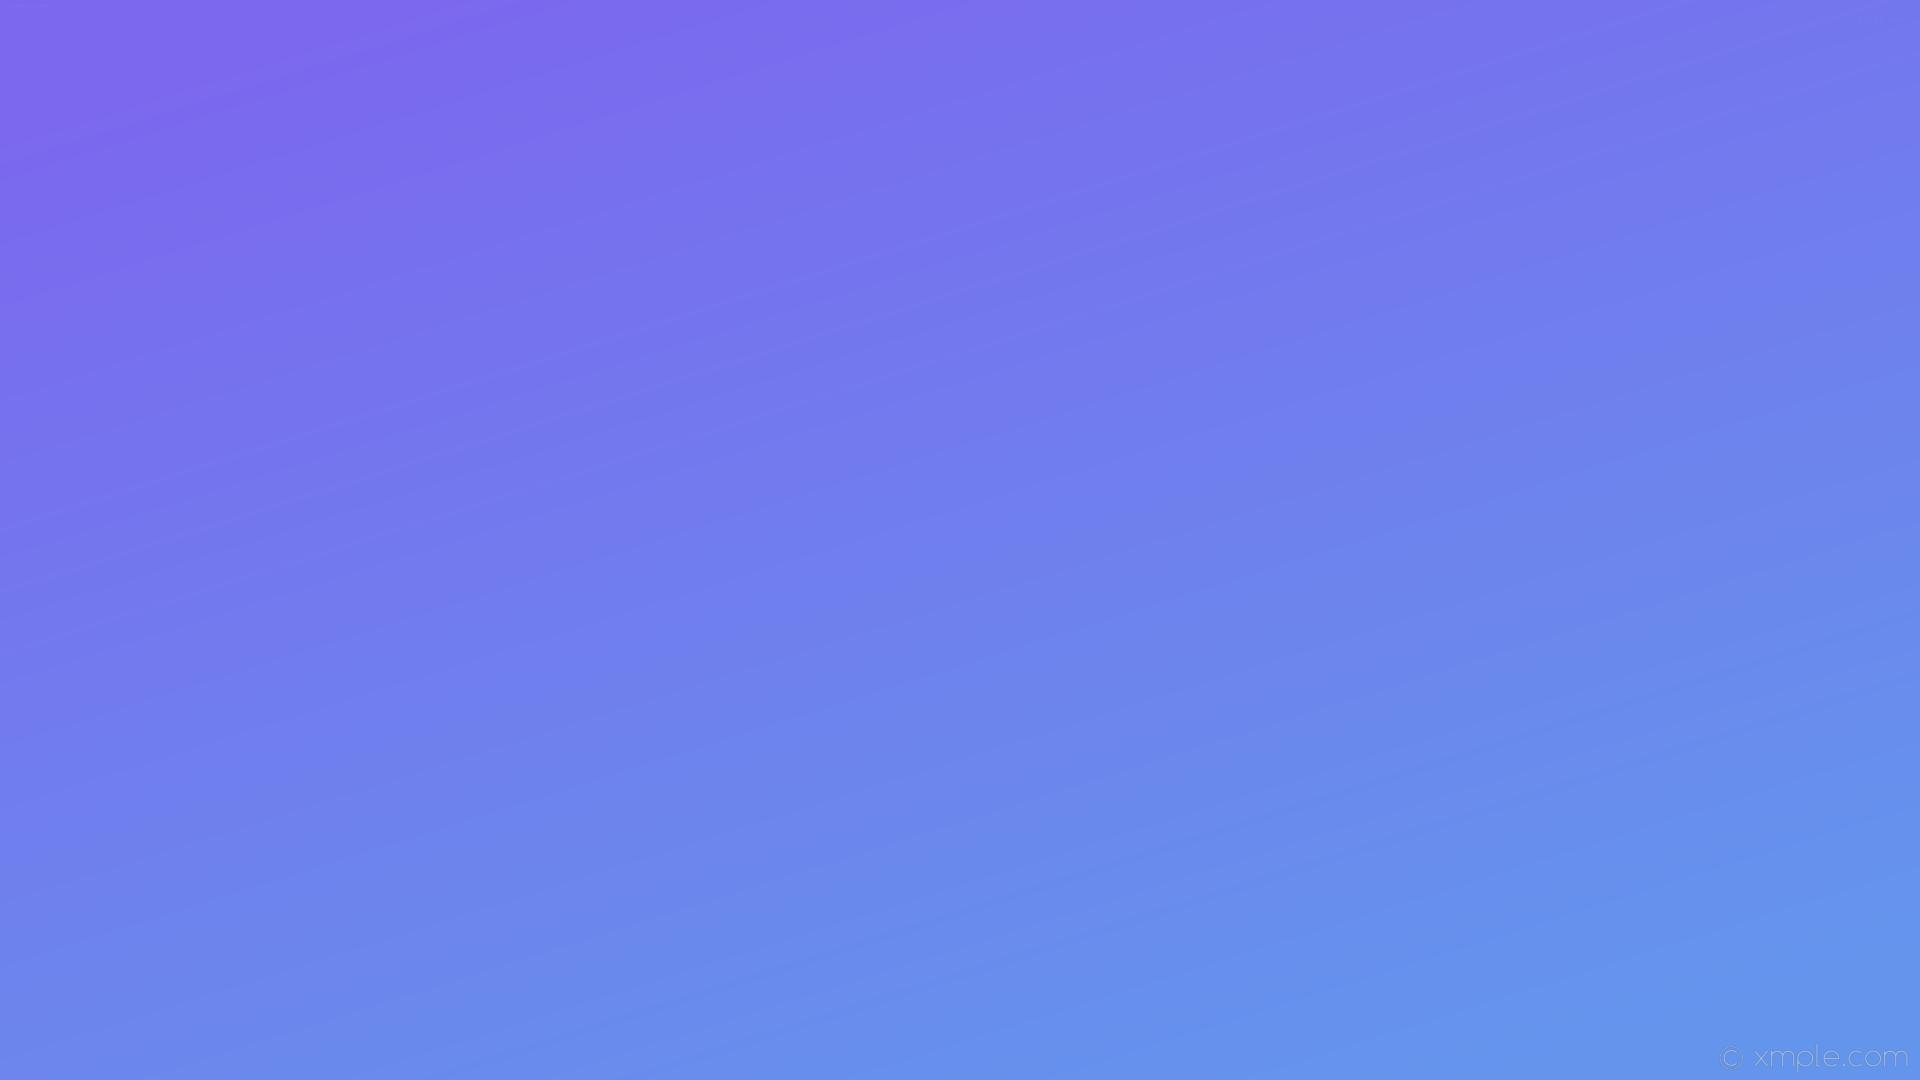 1920x1080 wallpaper linear blue purple gradient cornflower blue medium slate blue  #6495ed #7b68ee 315Â°